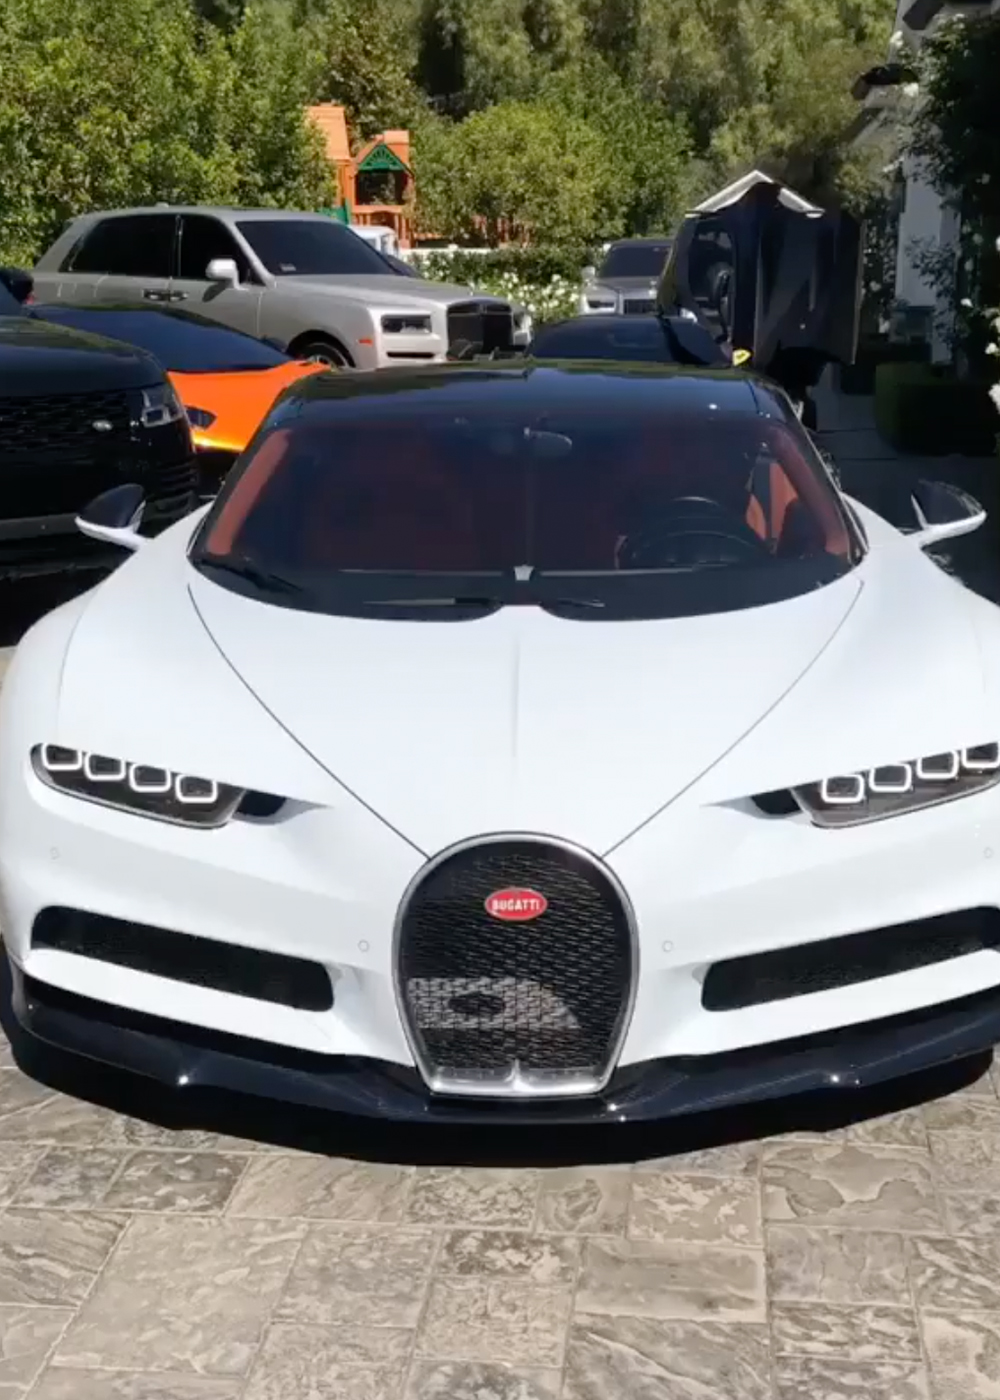 Kylie Jenner Bugatti Chiron luuxry car billionaire